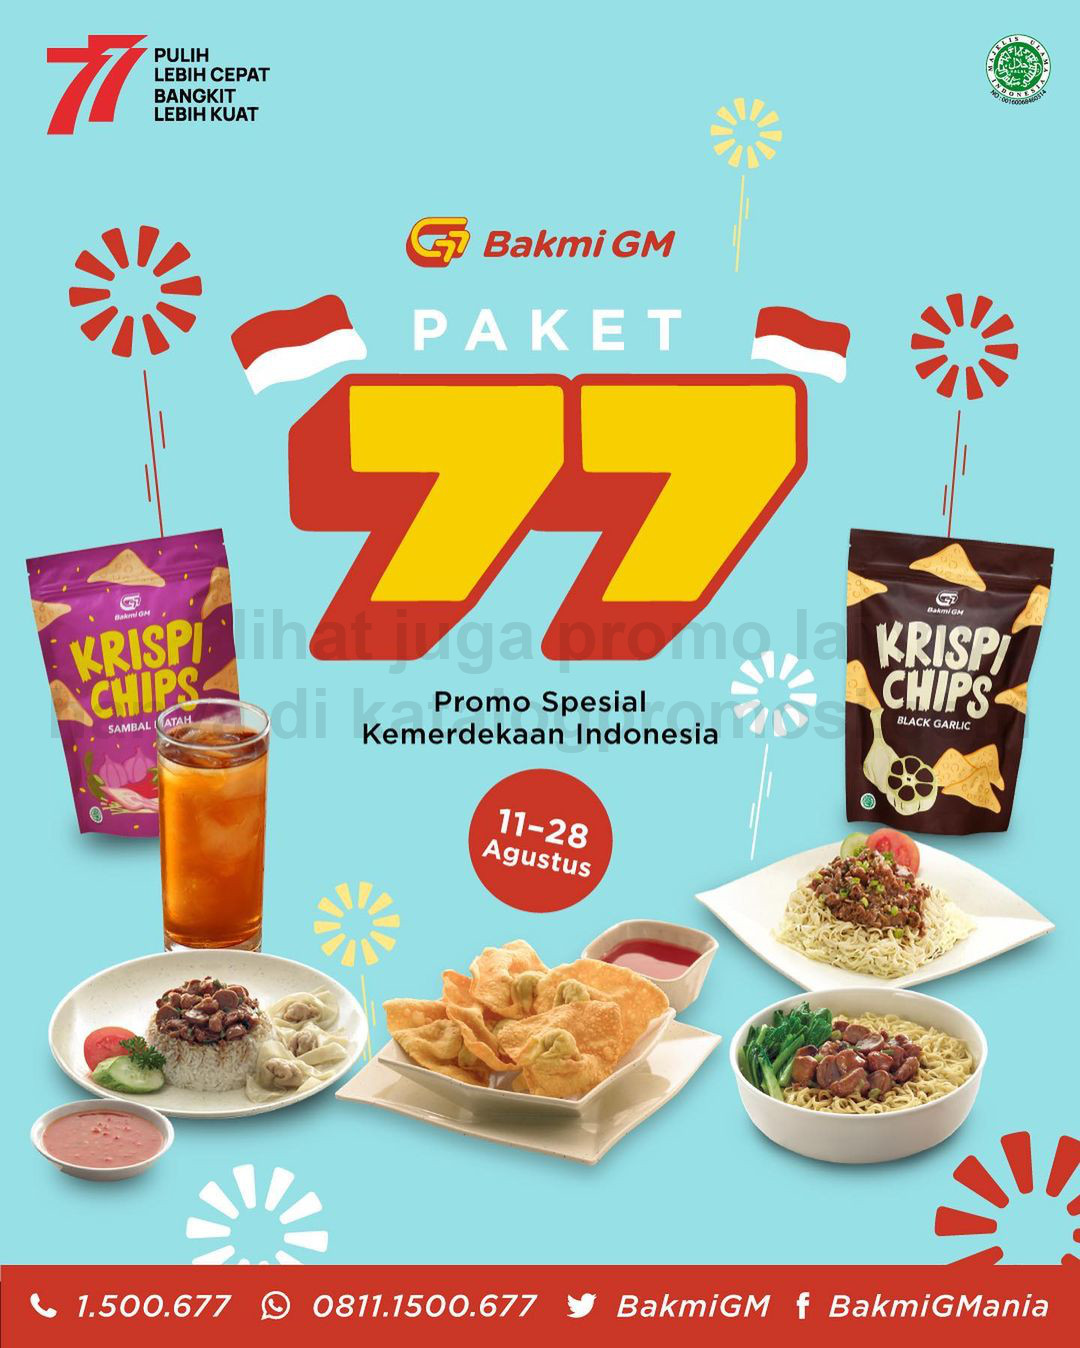 Promo BAKMI GM PAKET 77 SPESIAL KEMERDEKAAN INDONESIA - Harga Spesial Serba 77RIBU dan SERBA 17.845